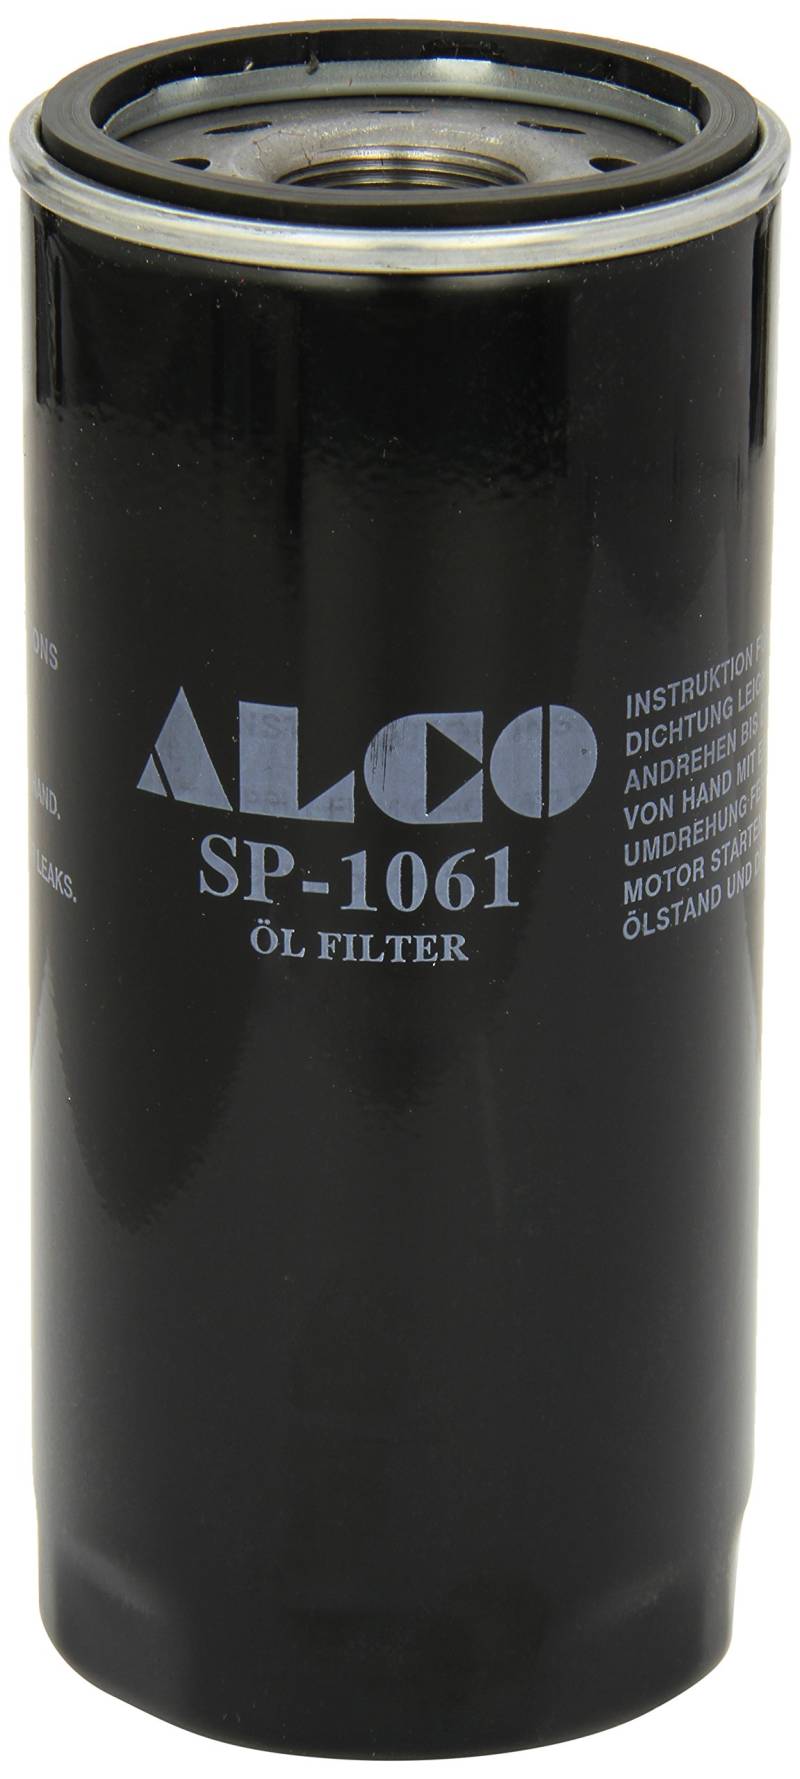 Alco Filter SP-1061 Ölfilter von Alco Filter